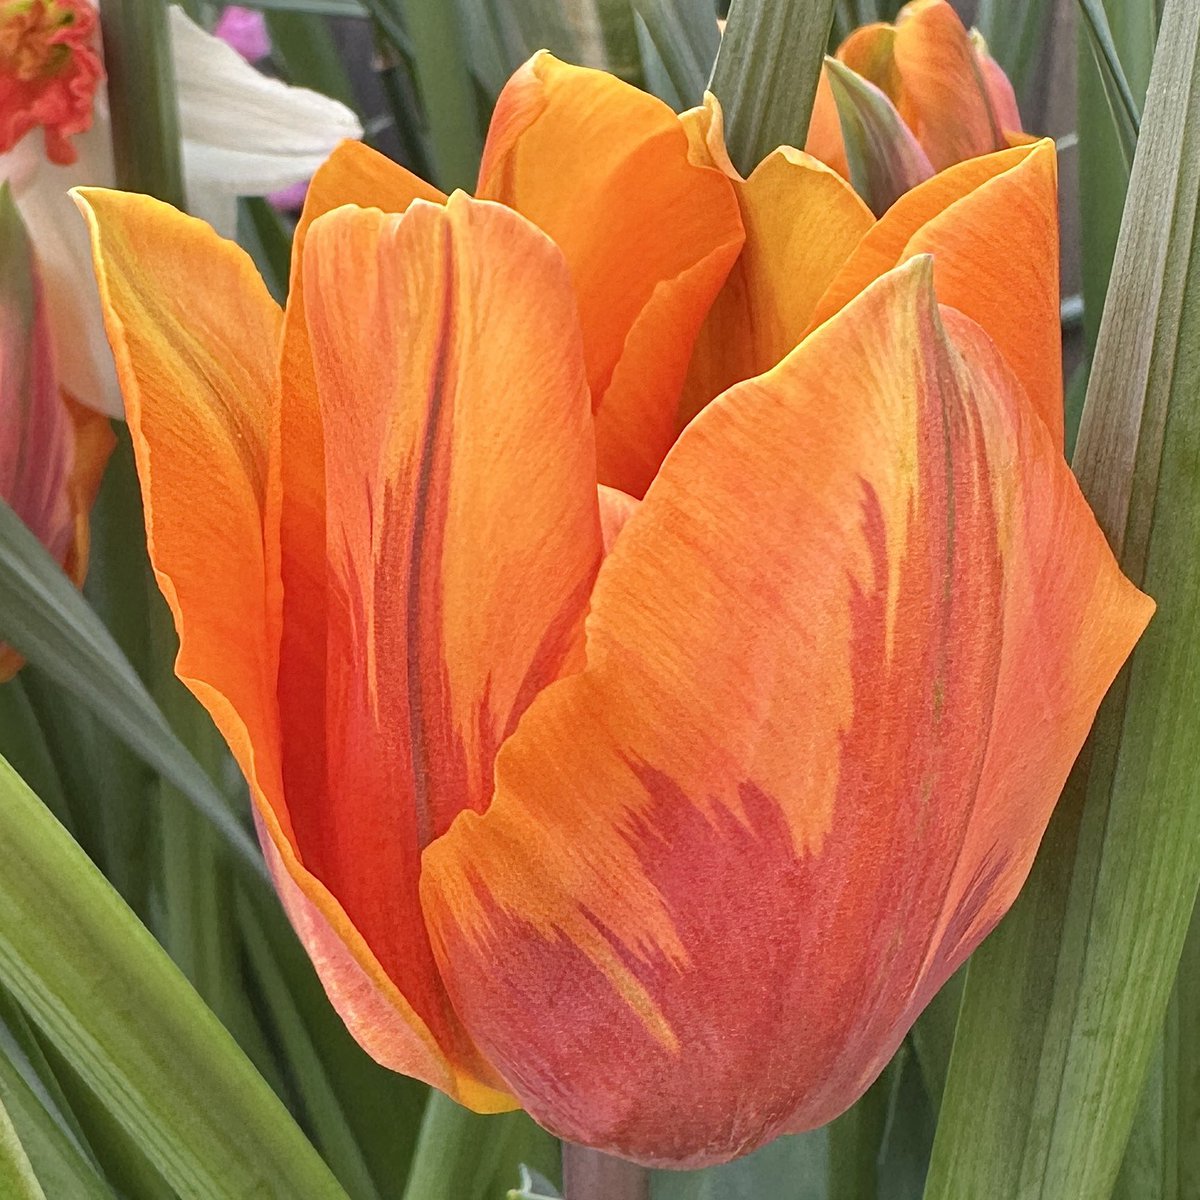 Just look at those markings 🧡Tulip ‘Princess Irene’ 🌷👑#Flowers #Gardening #Tulips